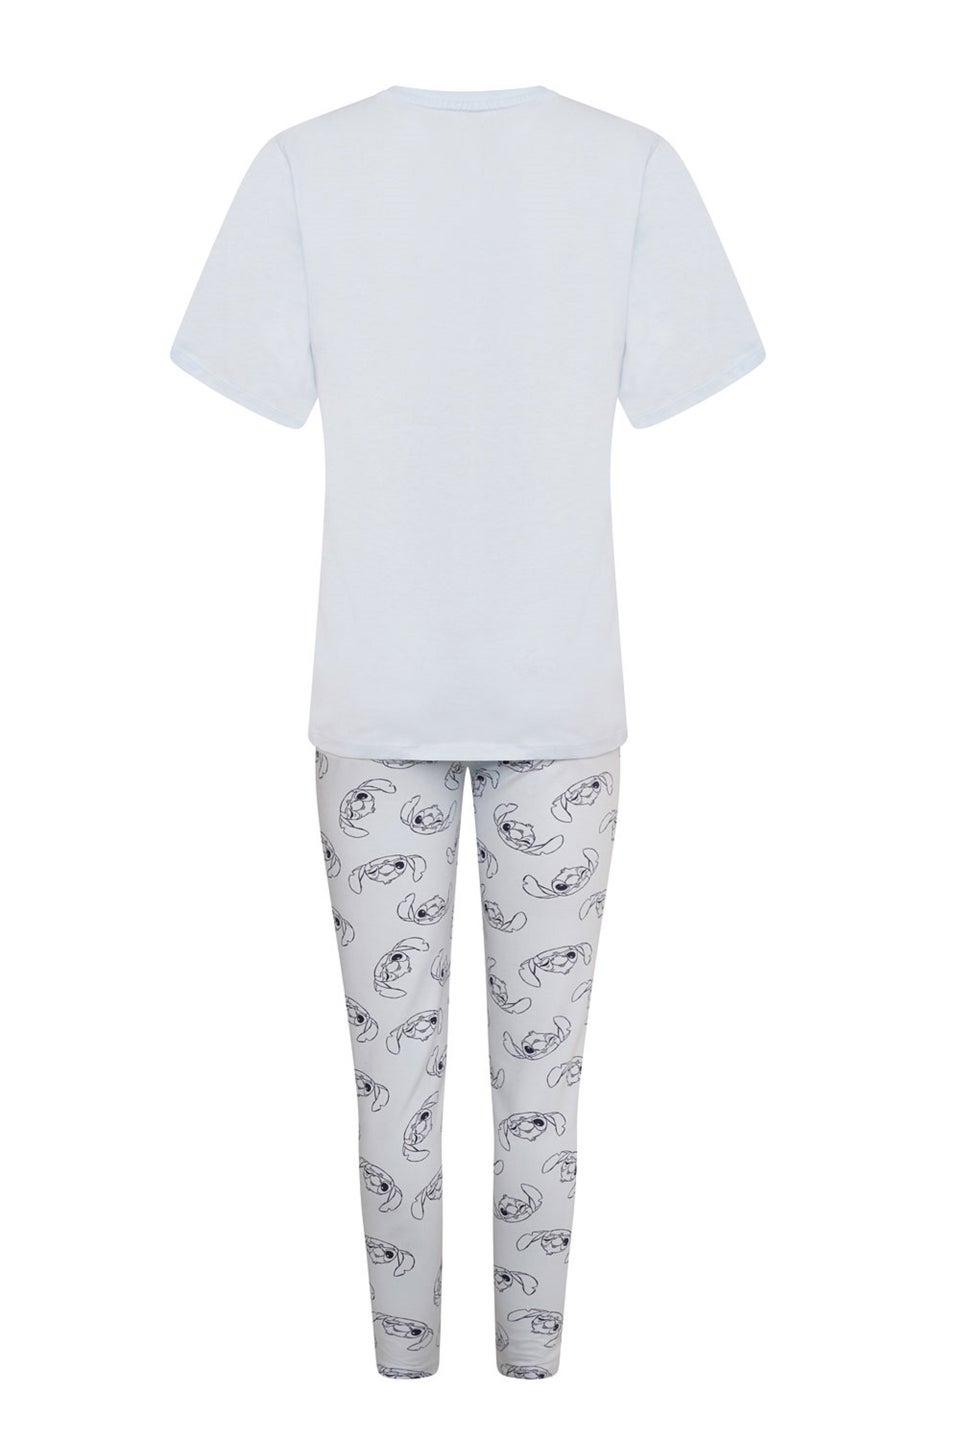 Brand Threads Kids' Stitch Pyjamas